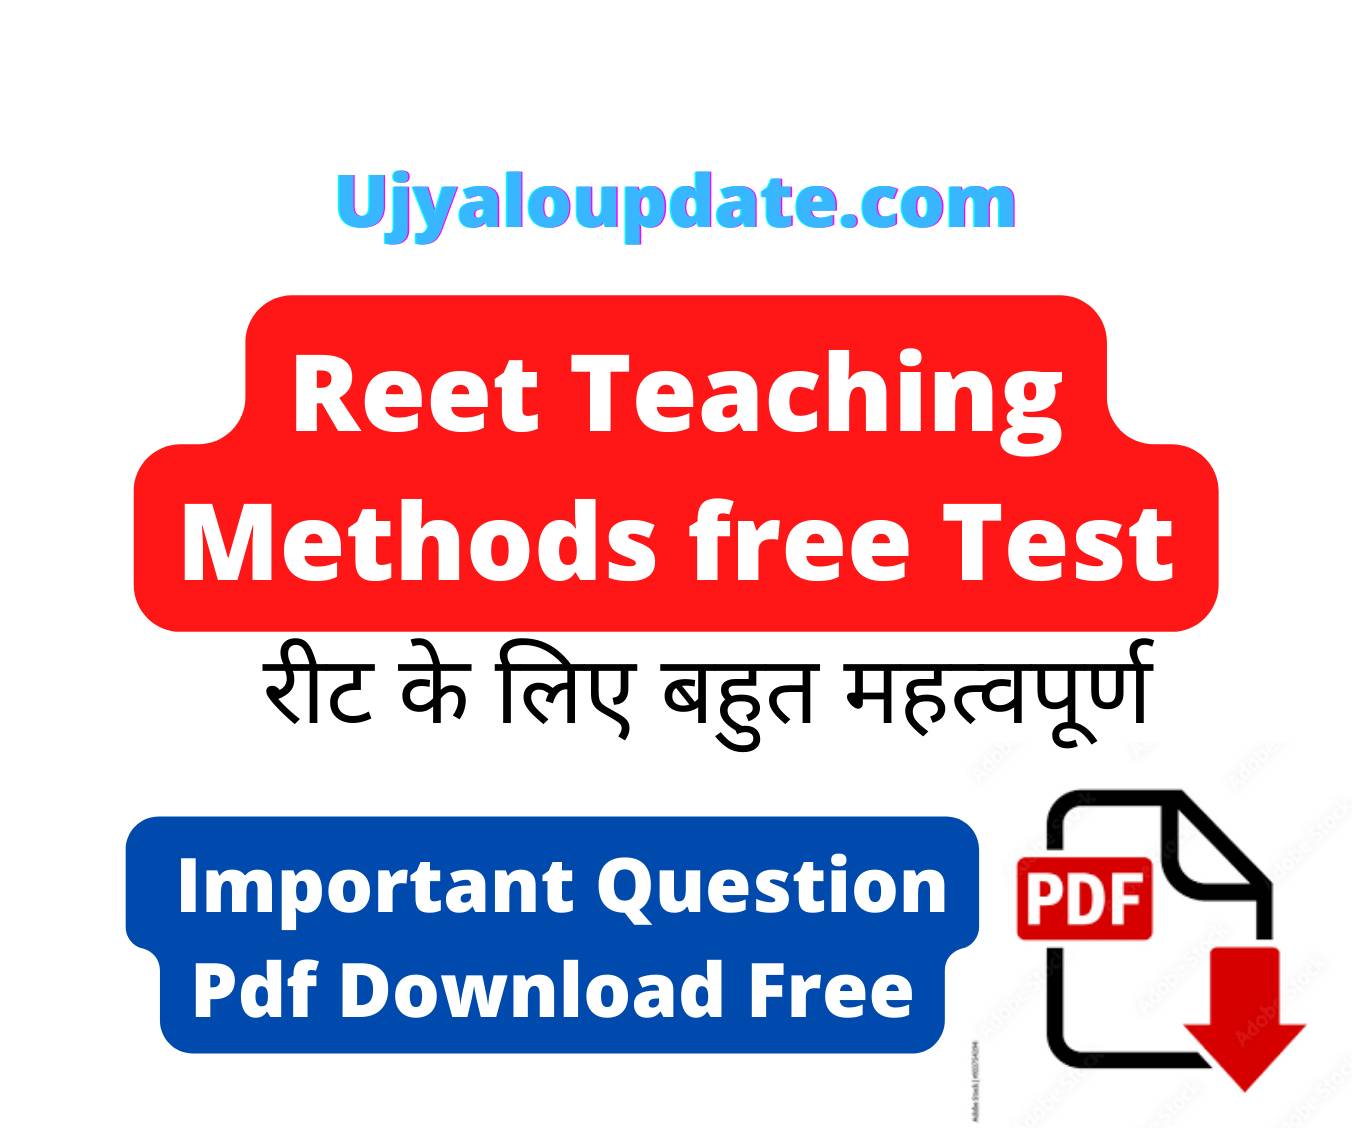 Reet teaching methods